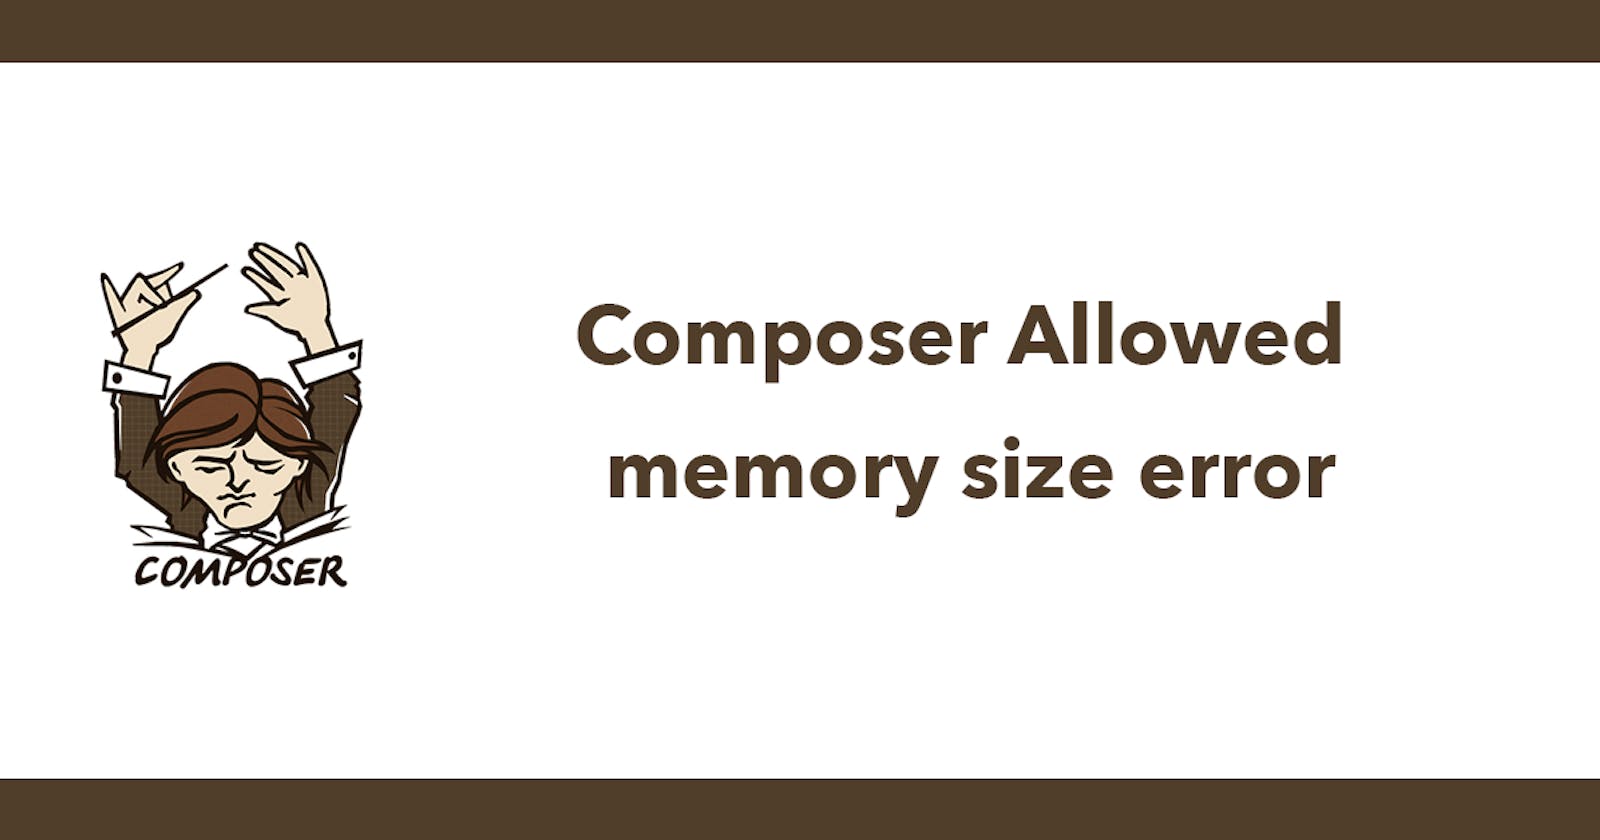 Composer Allowed memory size error